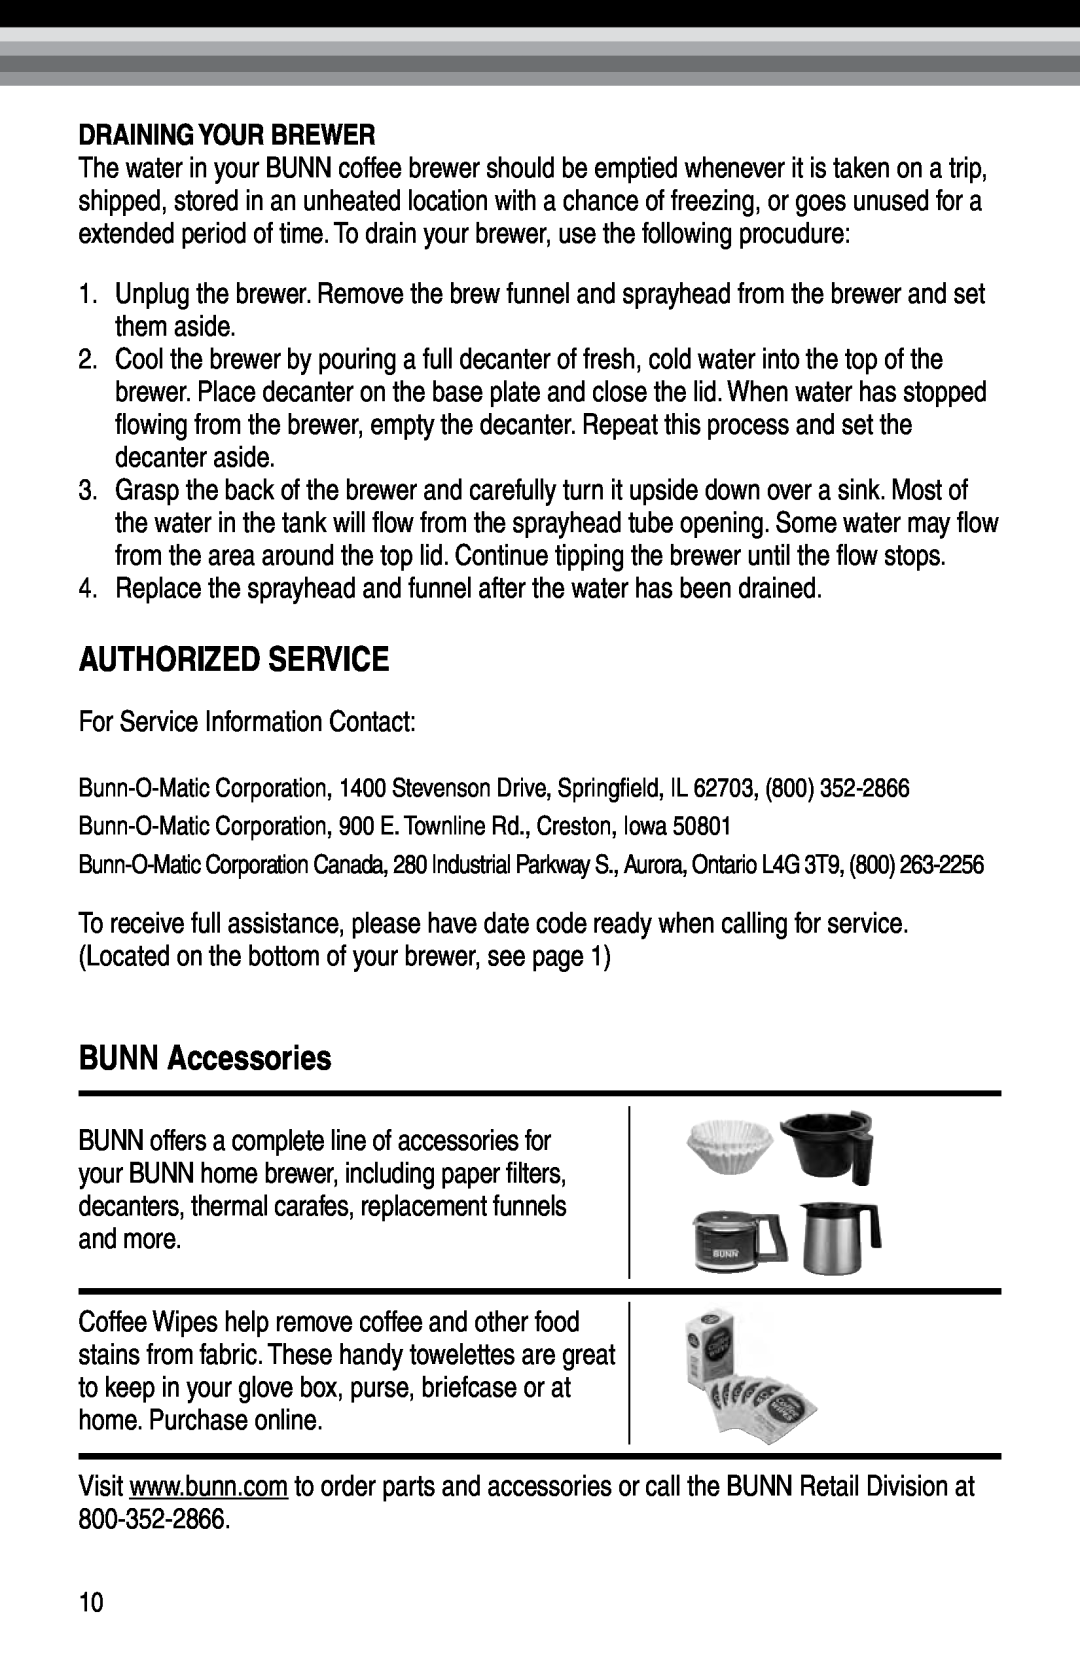 Bunn NHBX, Bunn BTX-B manual Authorized Service, BUNN Accessories, Draining Your Brewer 